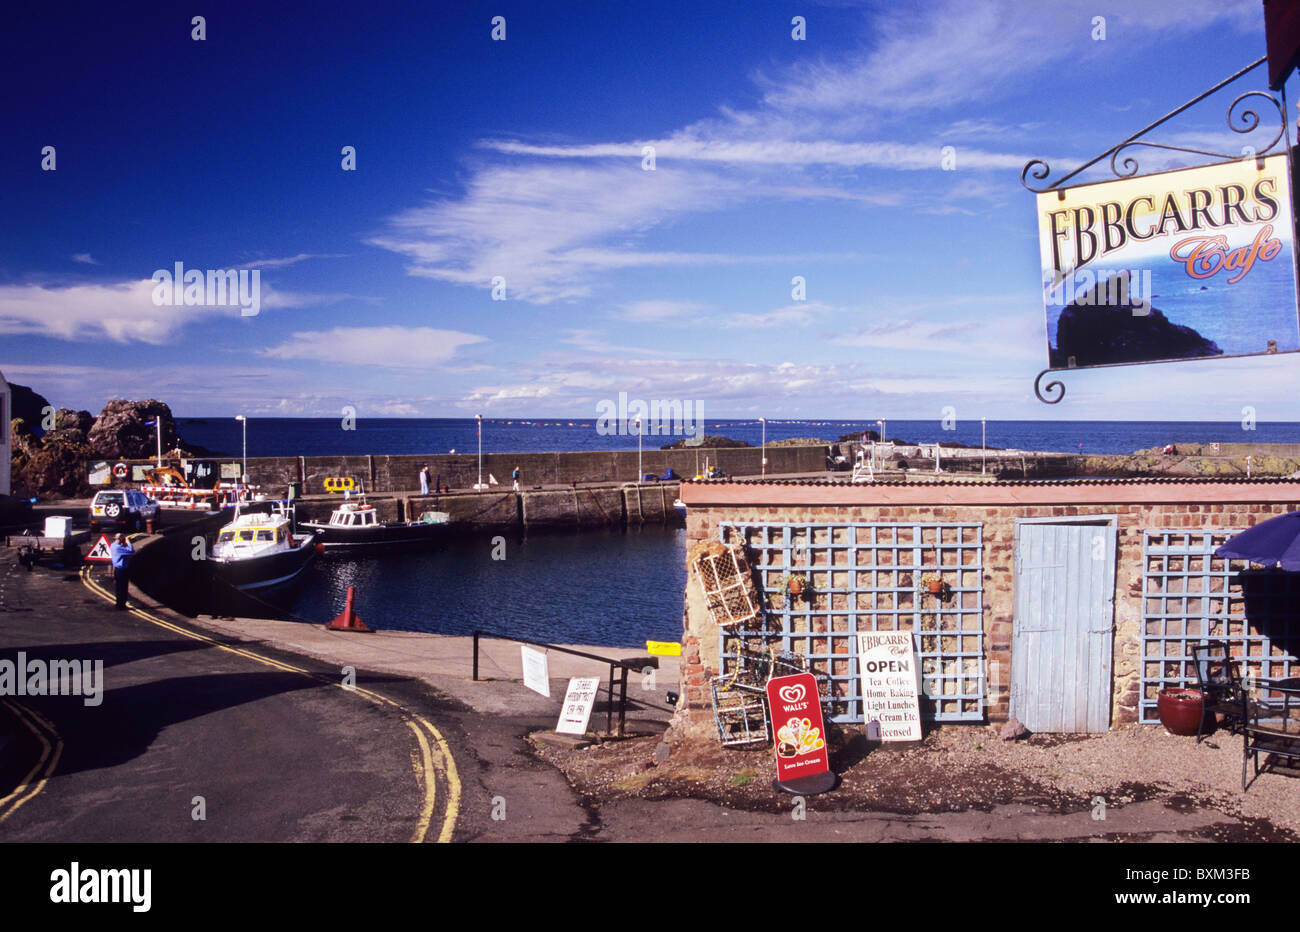 Ebb Carrs Cafe. St Abbs harbour. Scotland Stock Photo